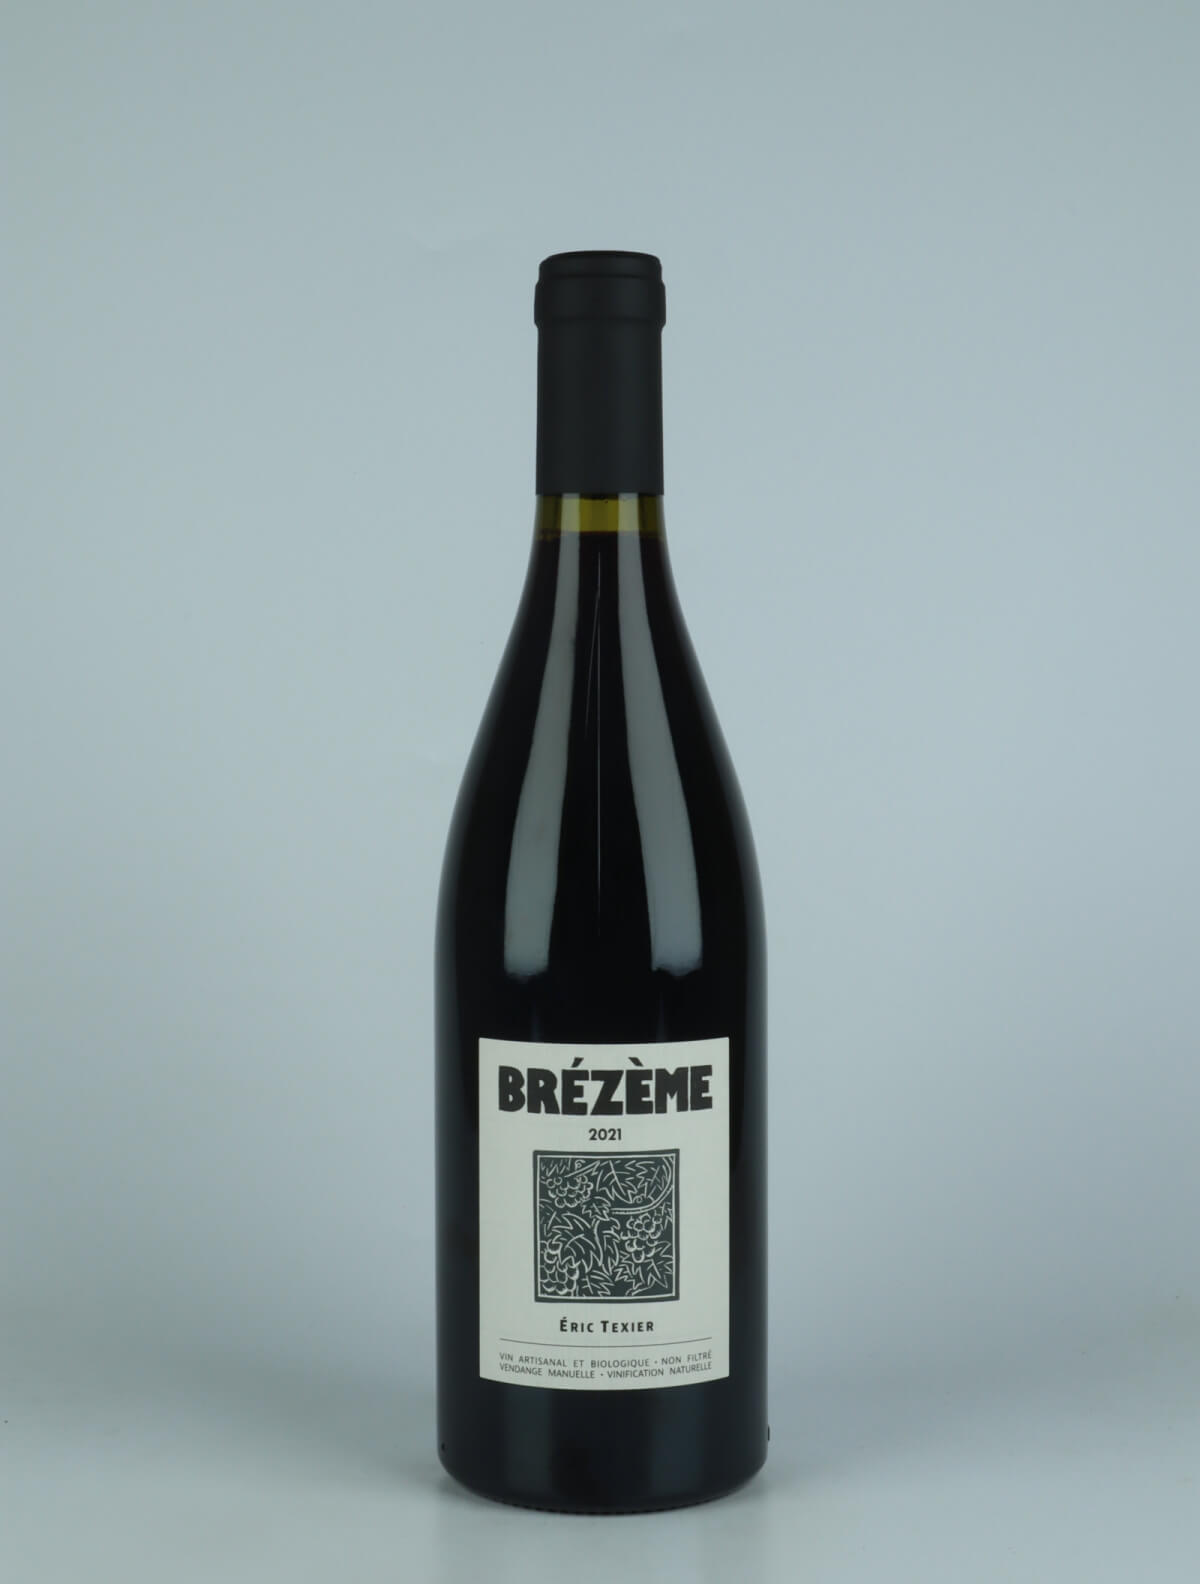 A bottle 2021 Brézème Red wine from Eric Texier, Rhône in France